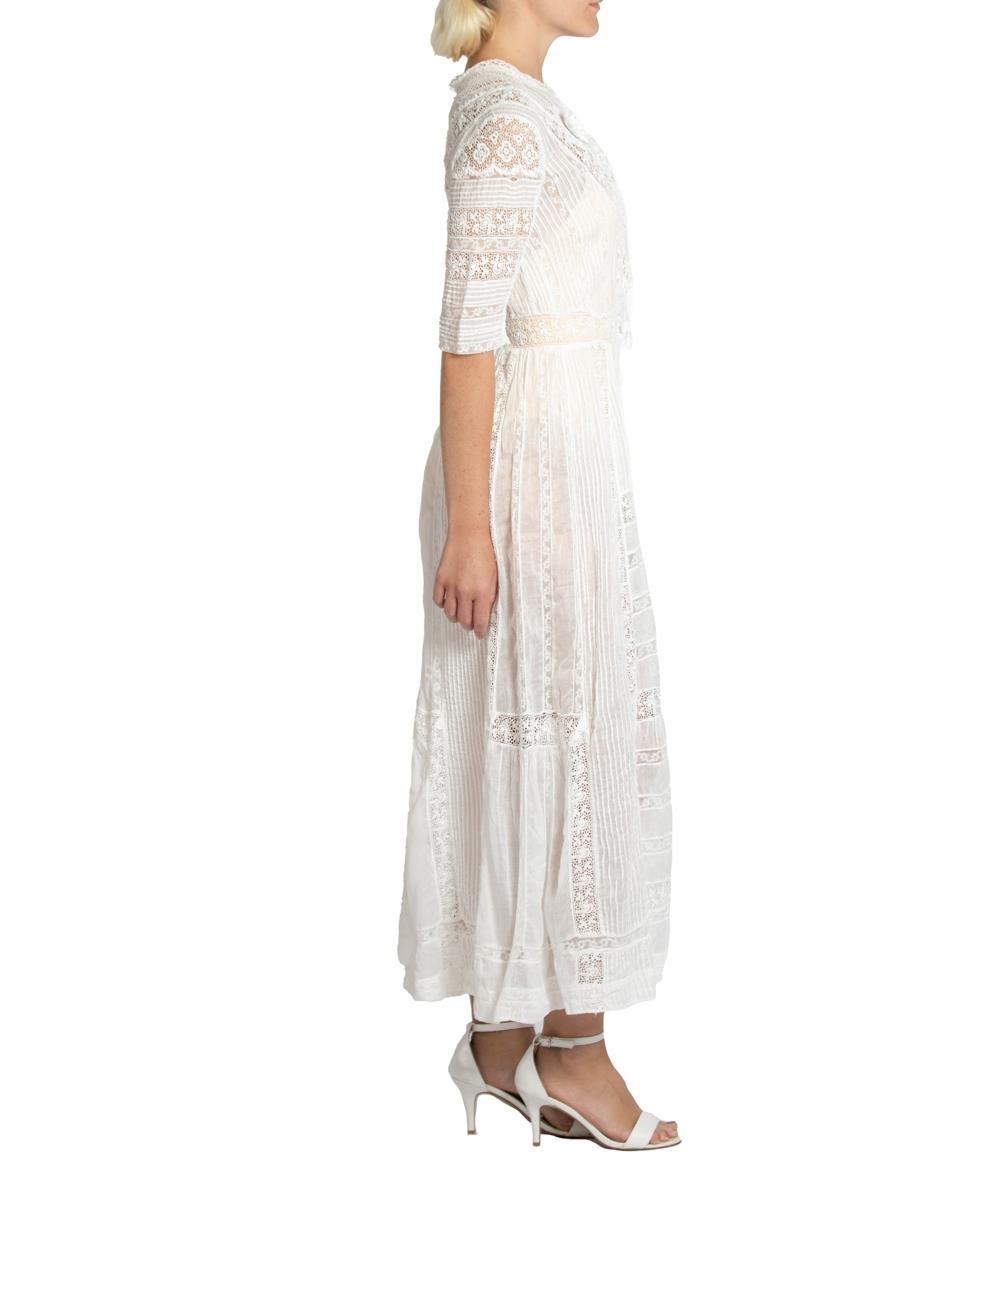 Women's Edwardian White Cotton & Lace Tea Dress With 3-D Flowers For Sale